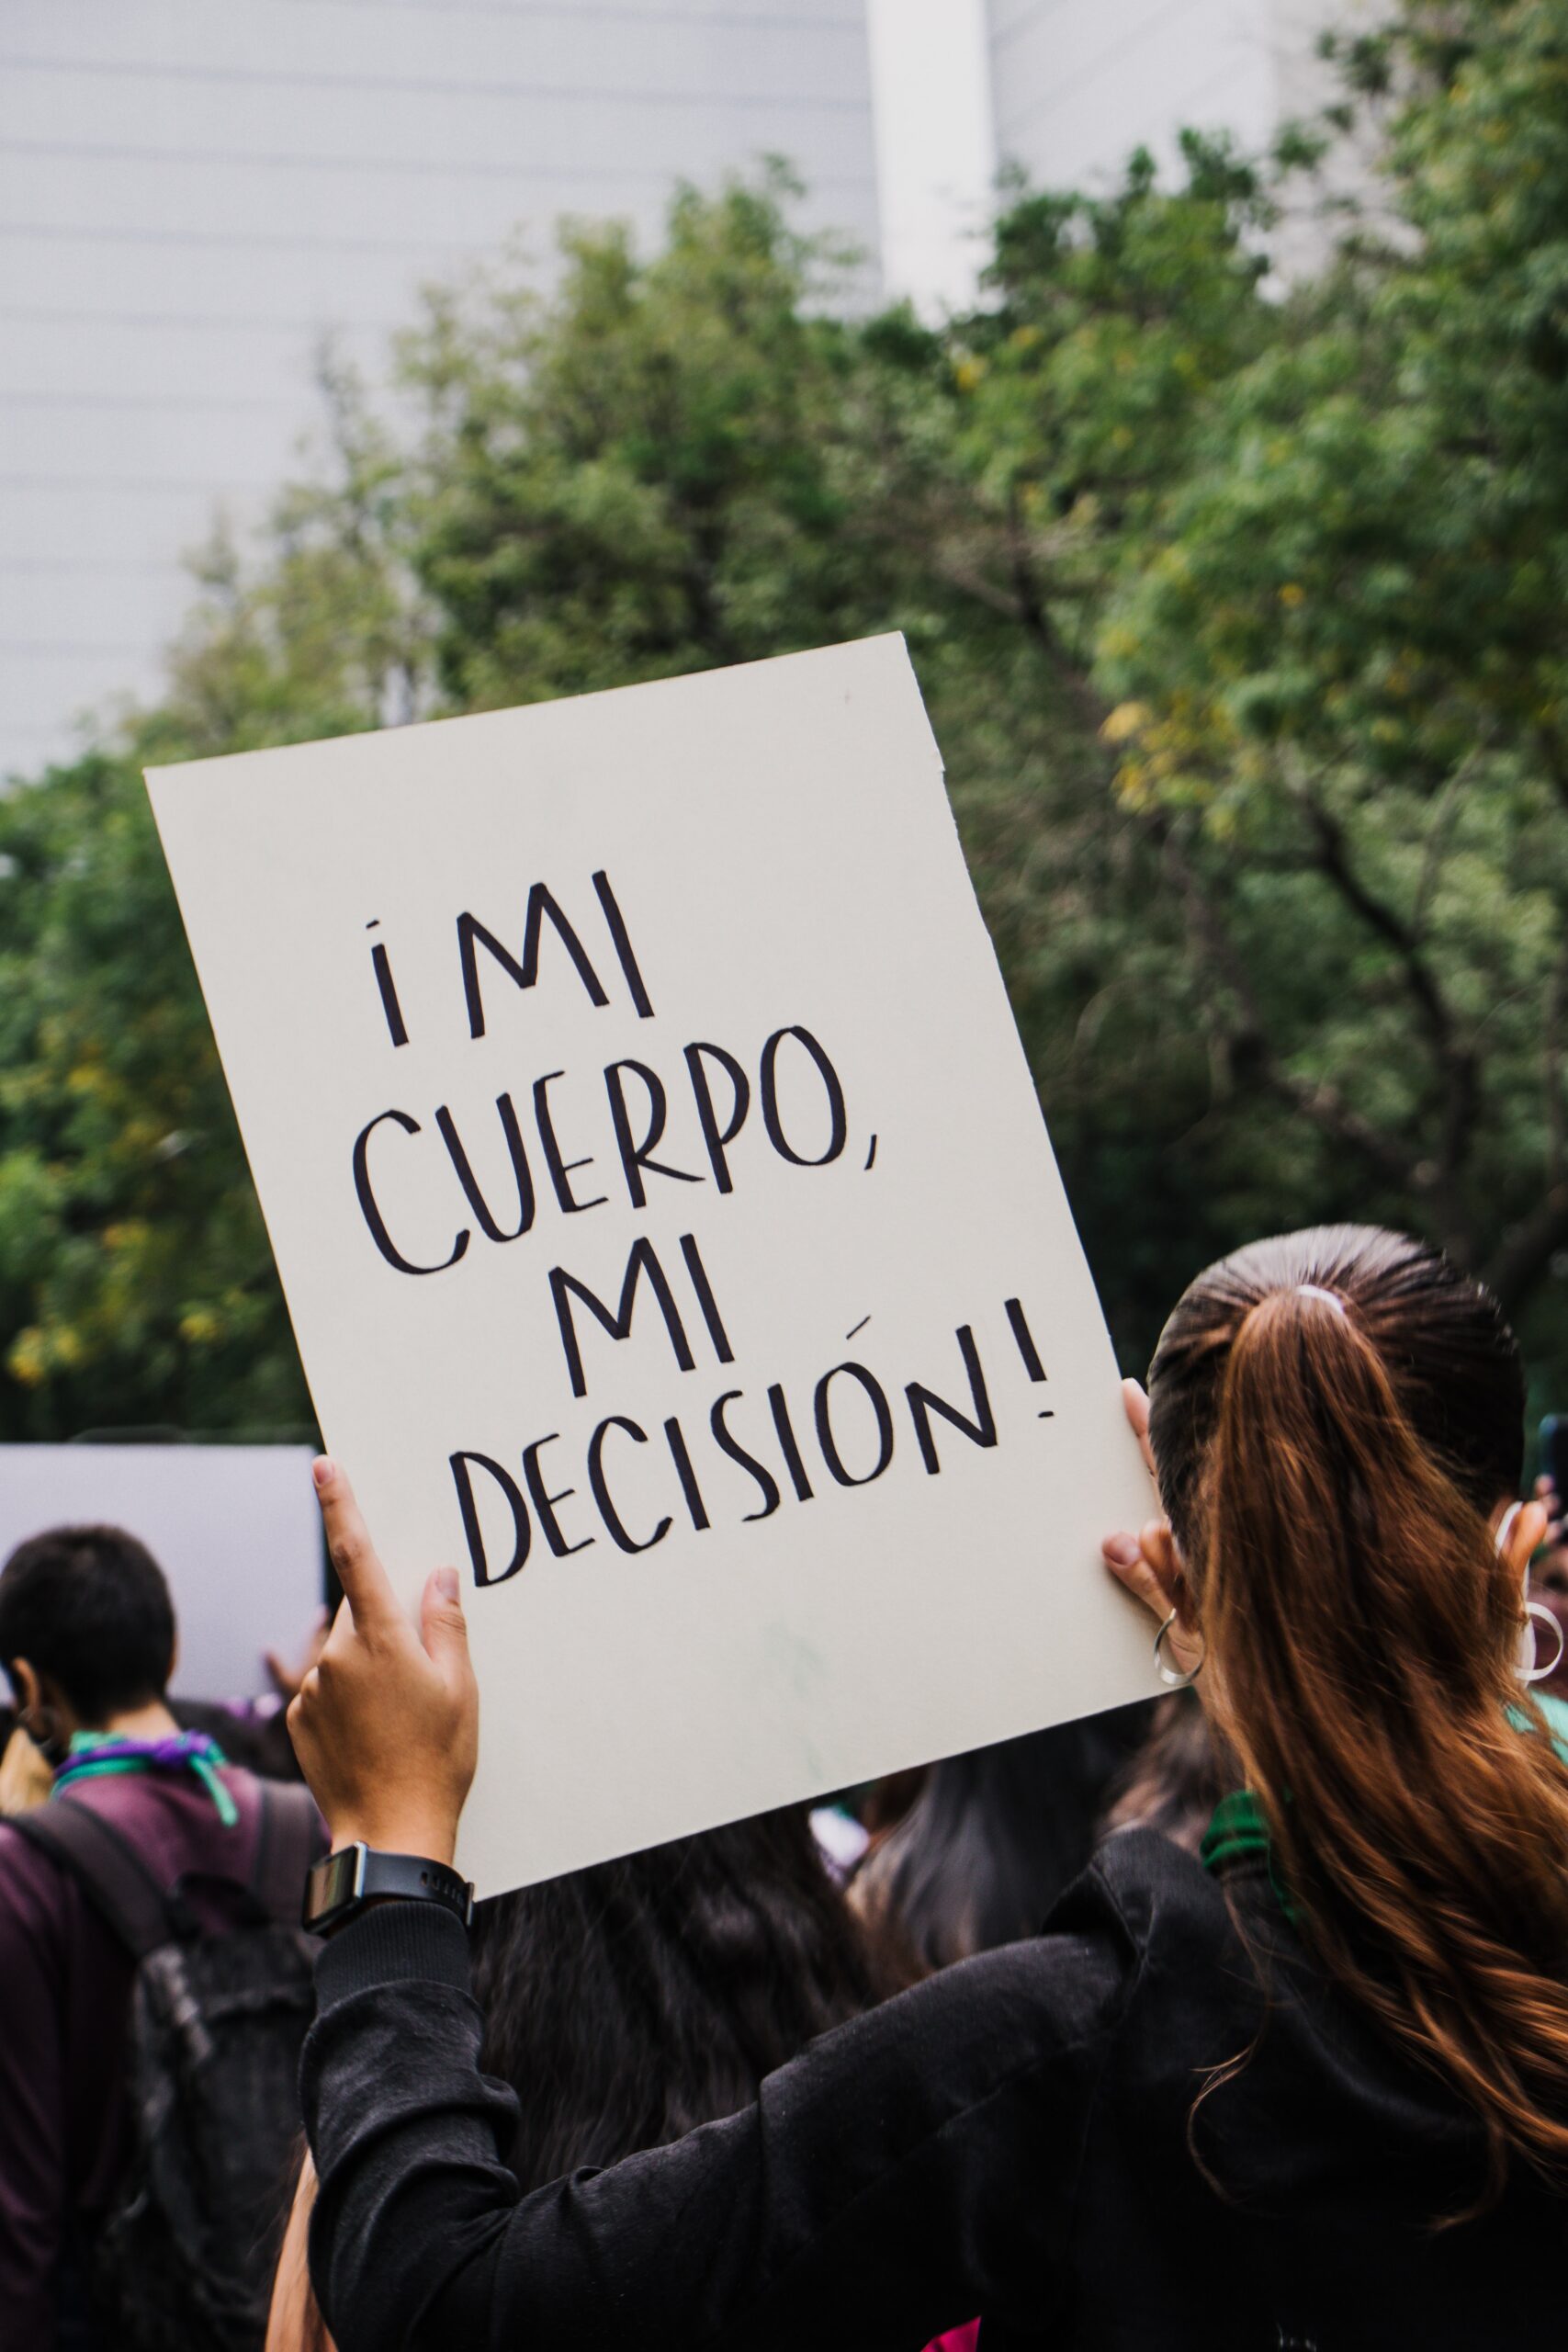 A sign reads "Mi cuerpo, mi decision"